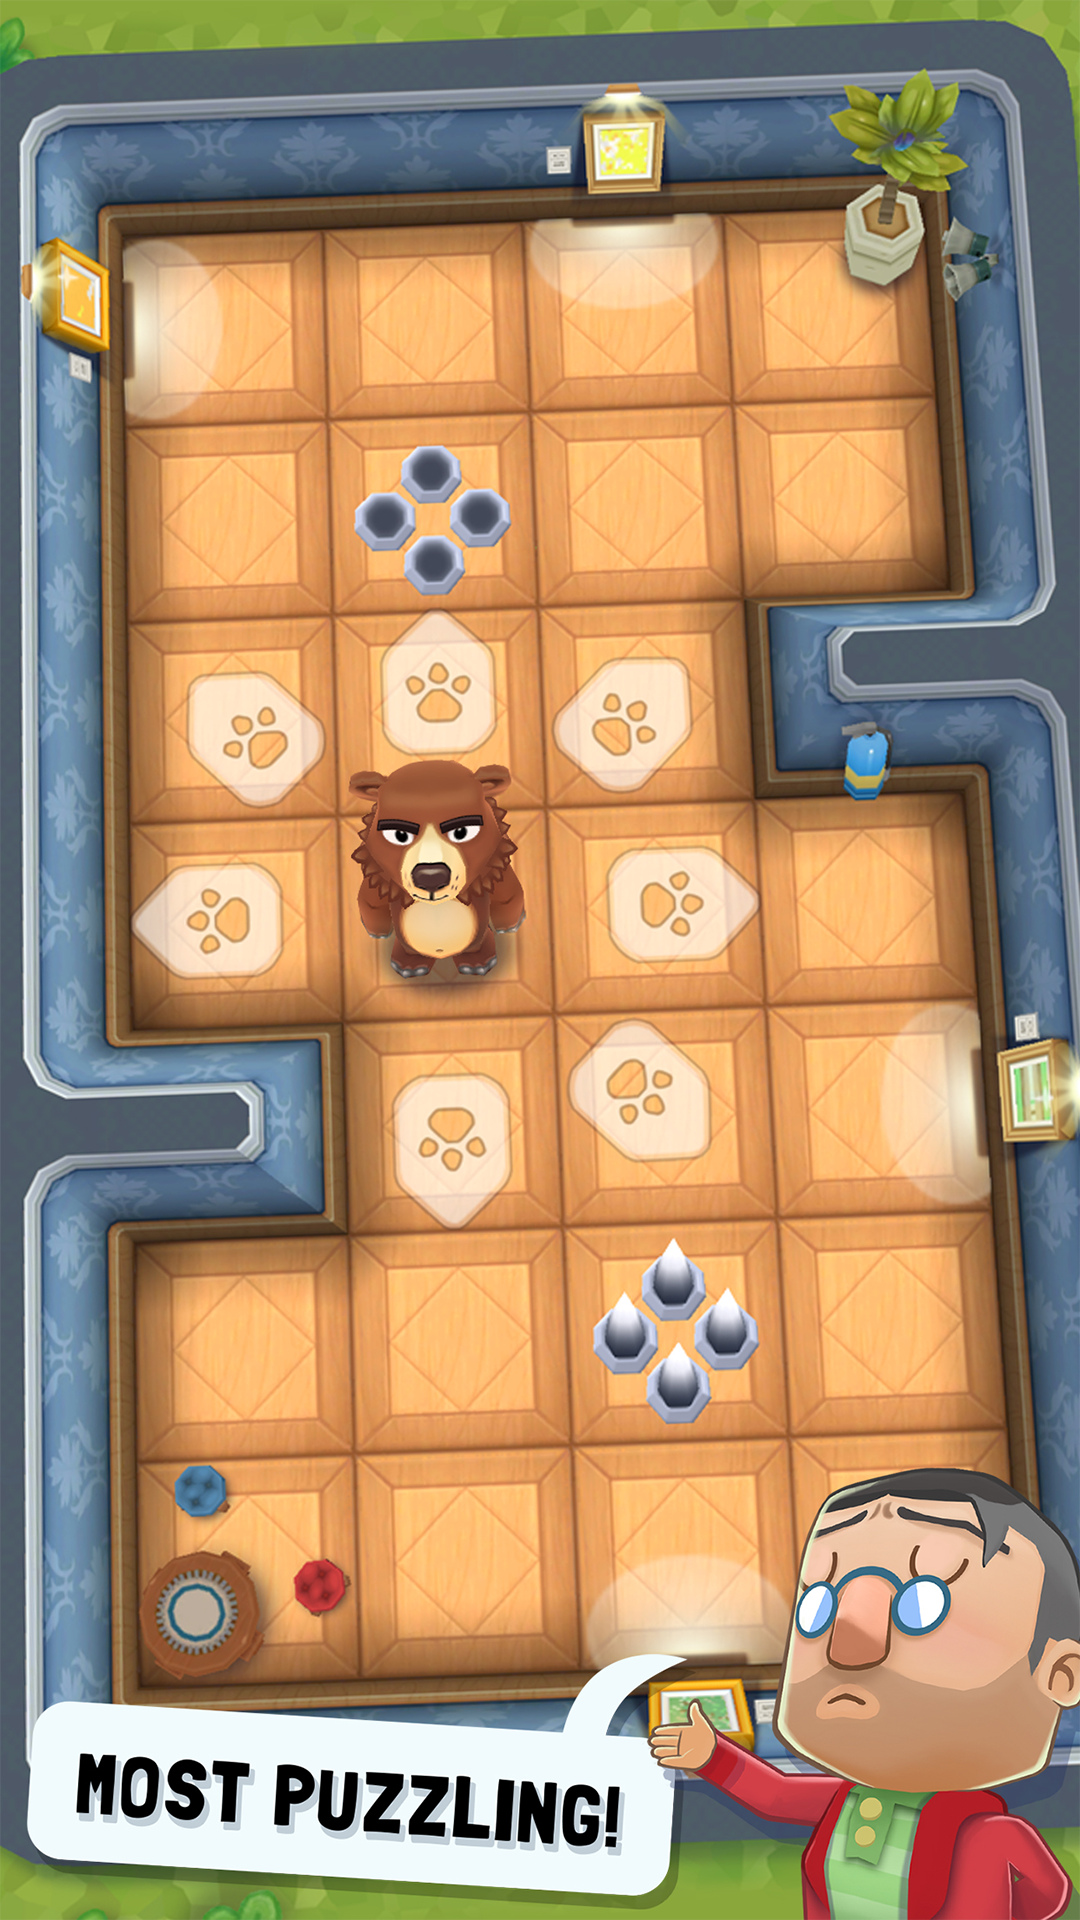 Bears vs. Art screenshot game